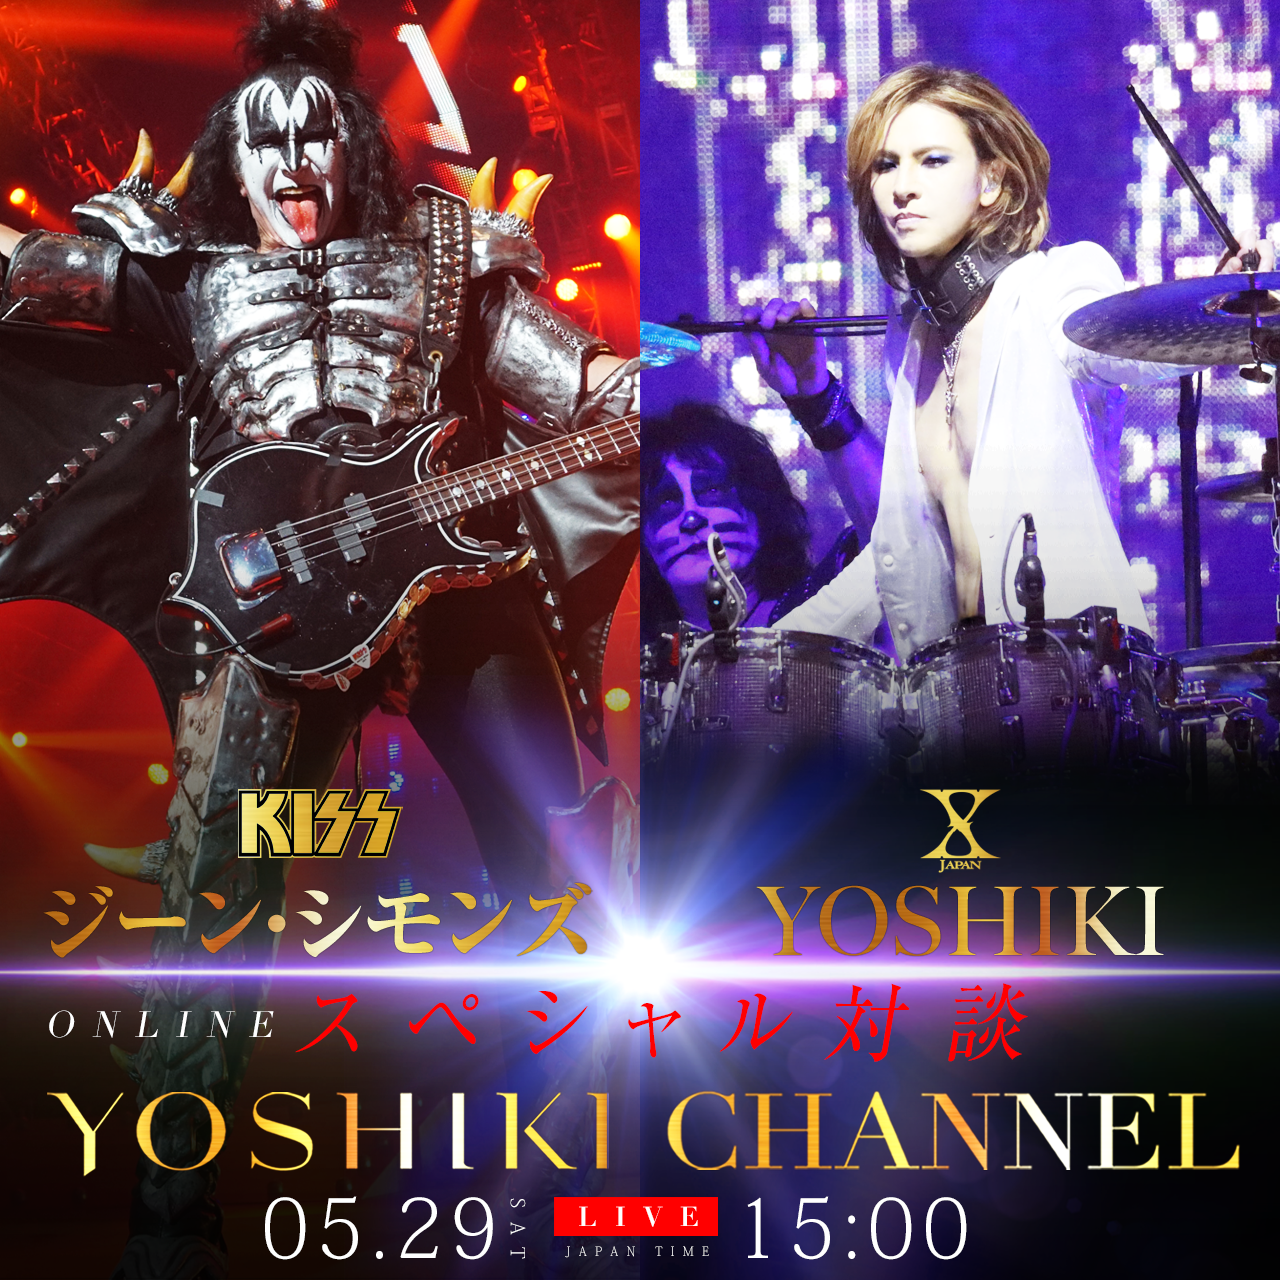 KISS ジーン・シモンズ × X JAPAN YOSHIKI 世界的対談が再び実現 